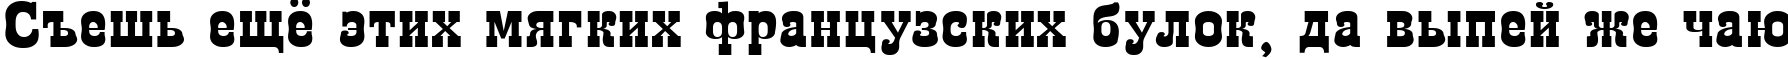 Пример написания шрифтом Egipet Bold текста на русском